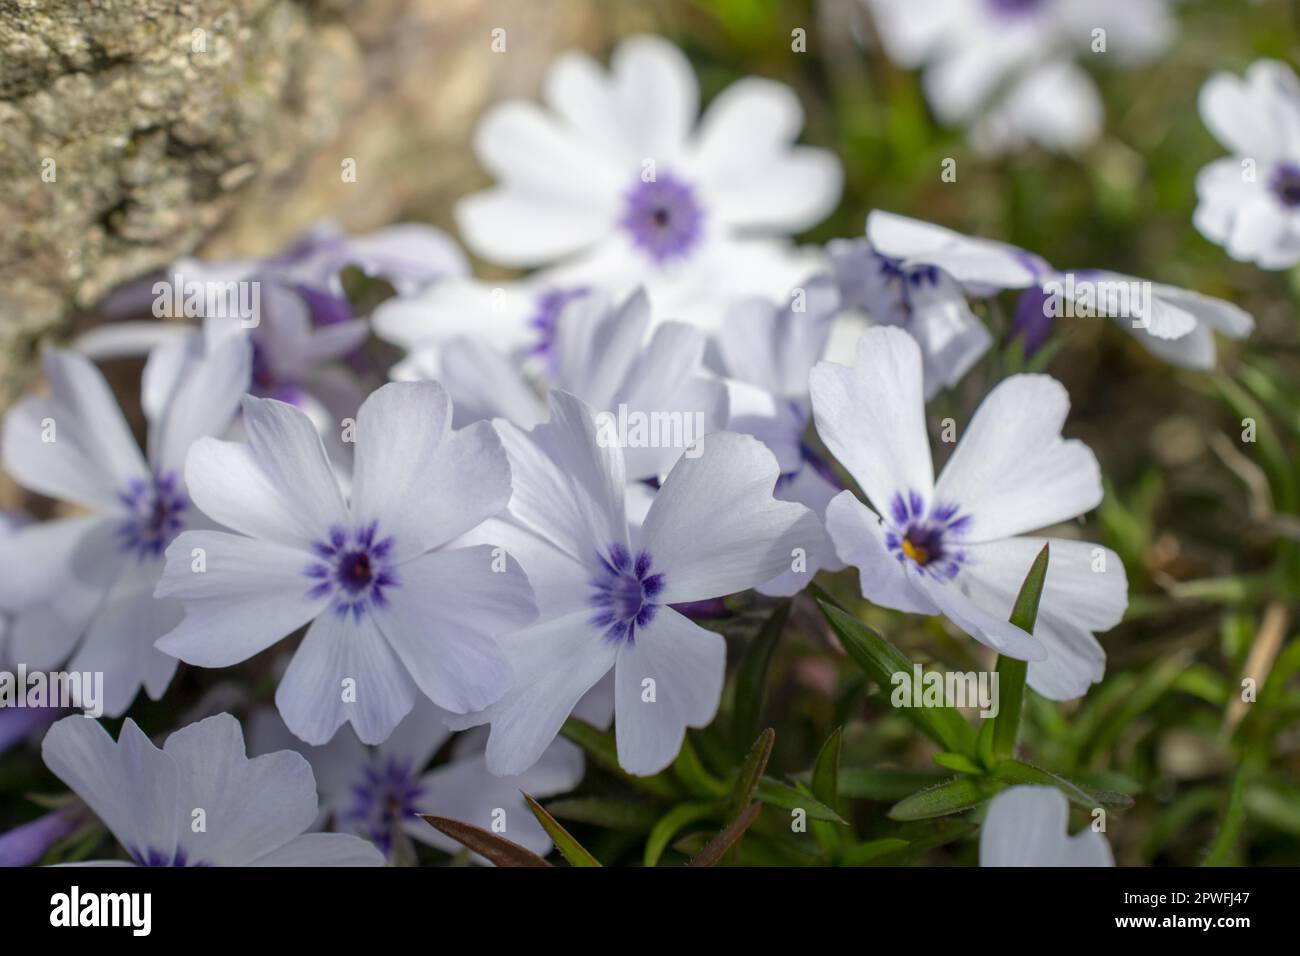 White with a blue eye moss phlox Bavaria. Stock Photo